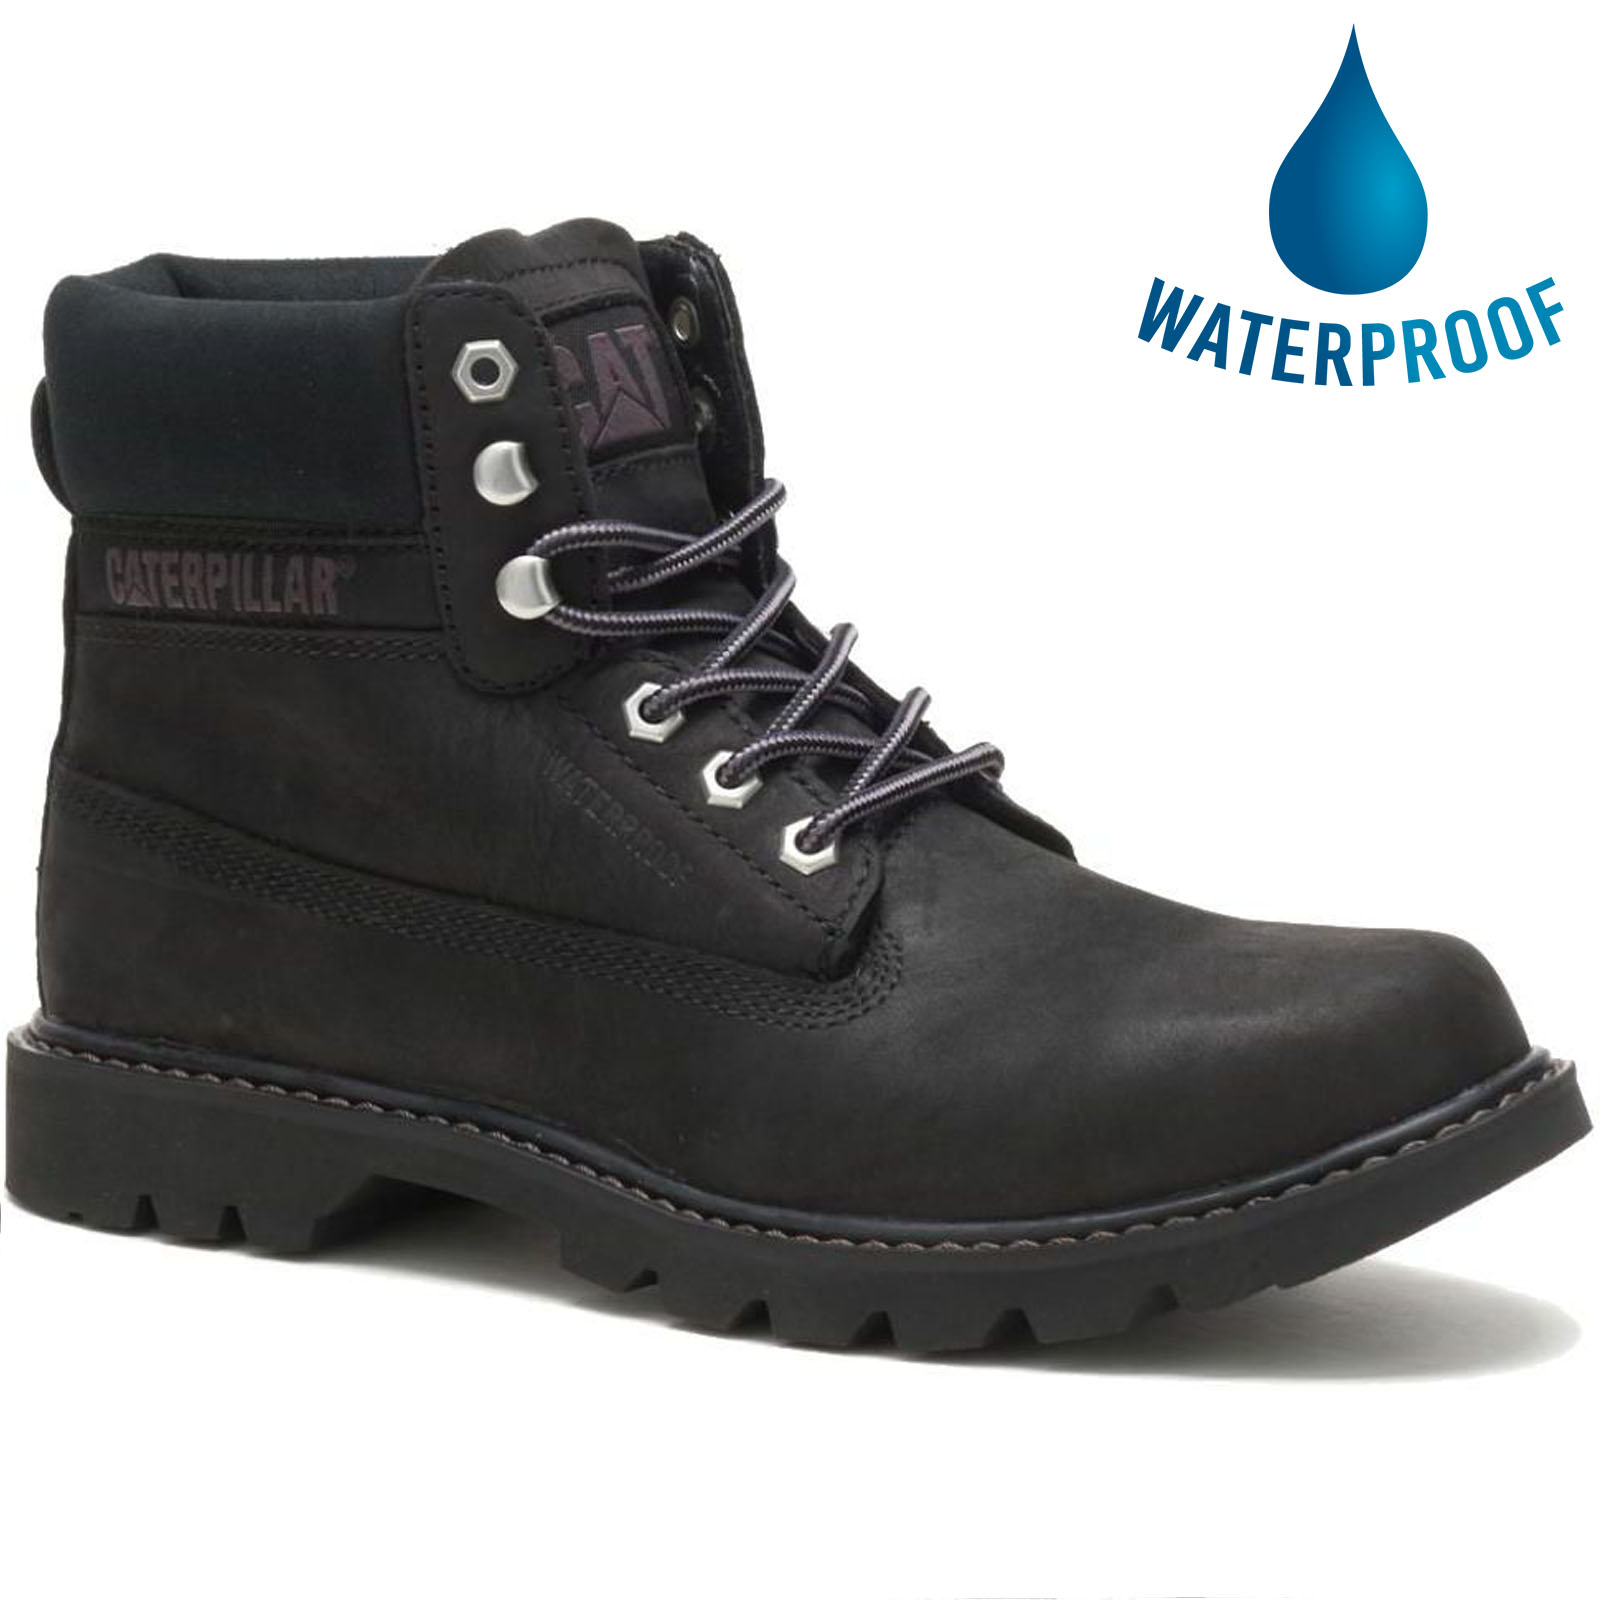 Caterpillar Men's eColorado WP Waterproof Boots - Black